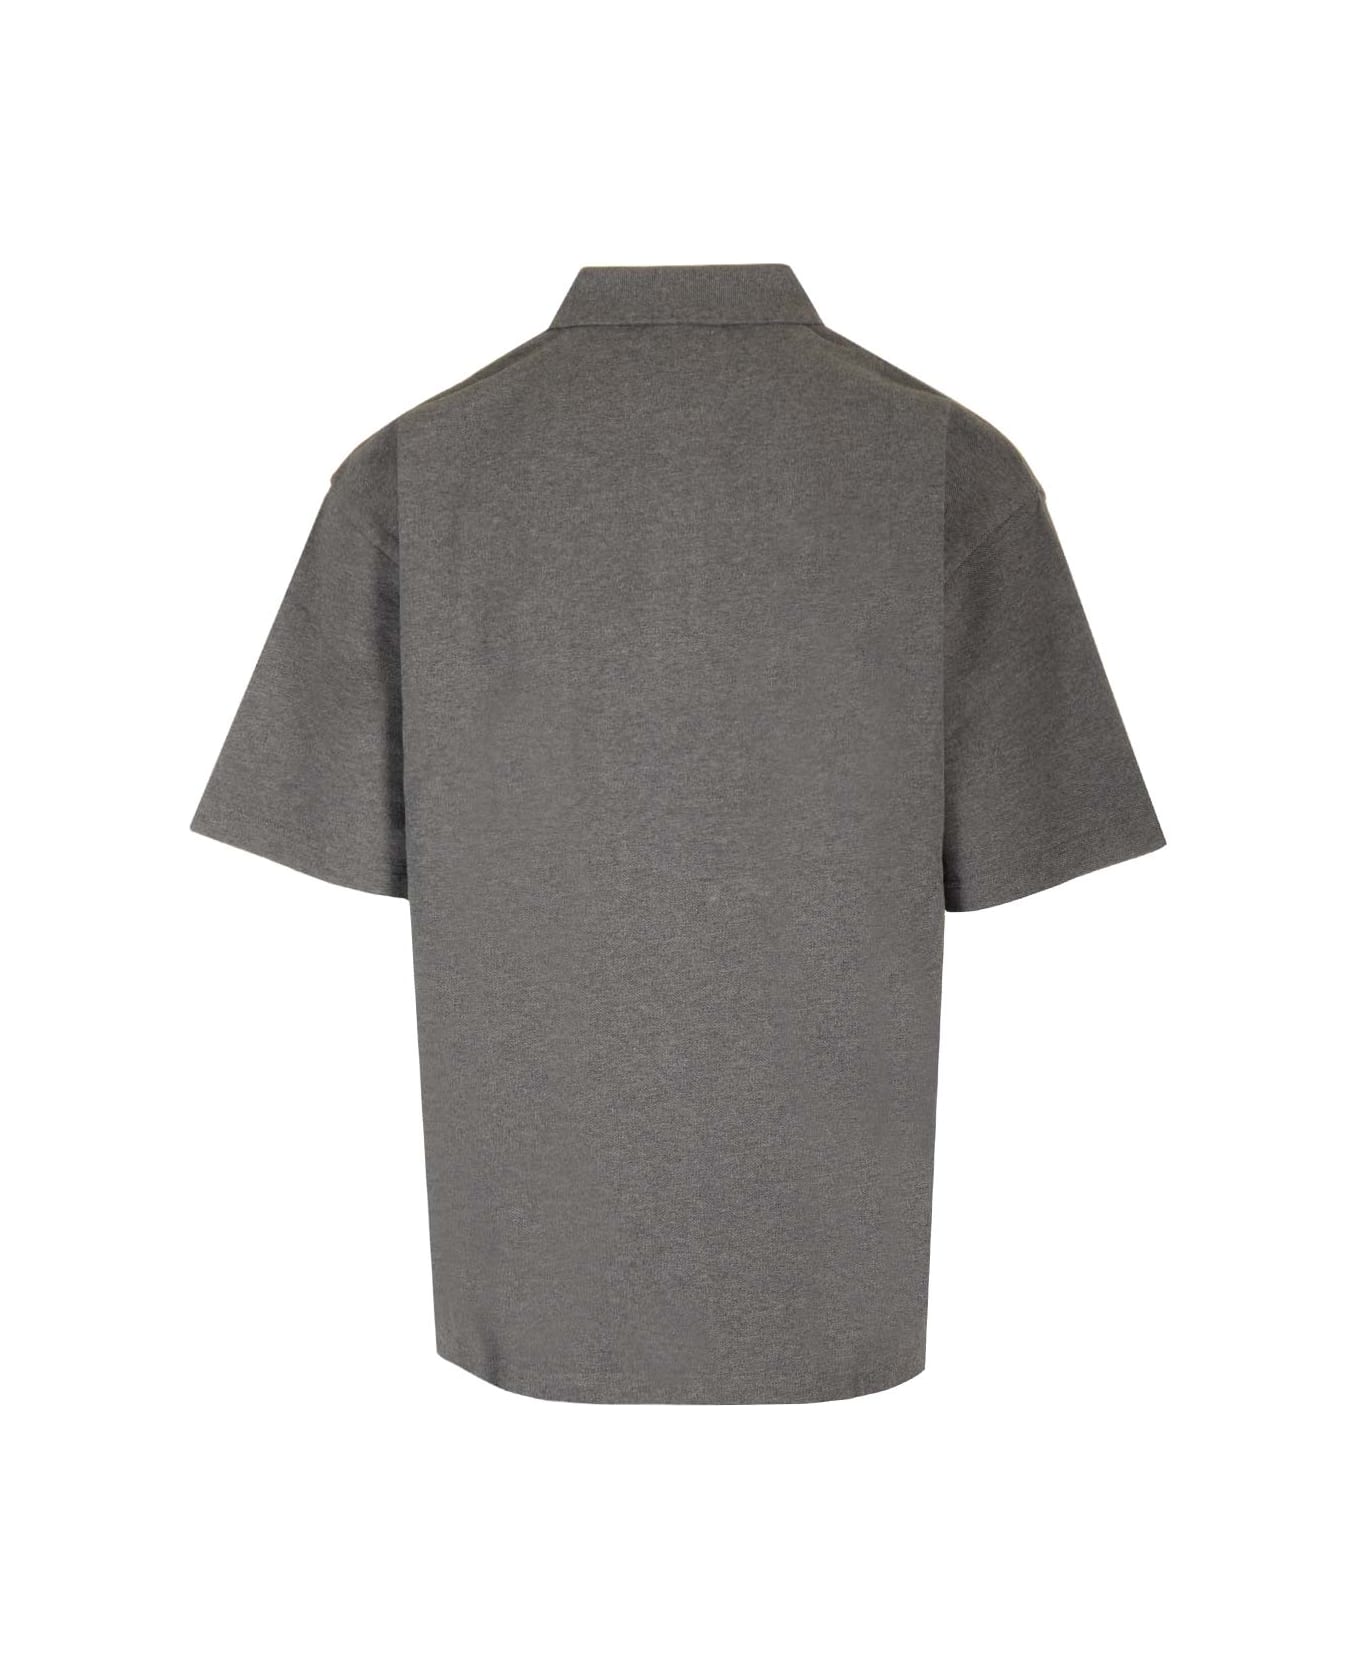 Maison Kitsuné Comfort Fit Polo Shirt - Dark Grey Melange